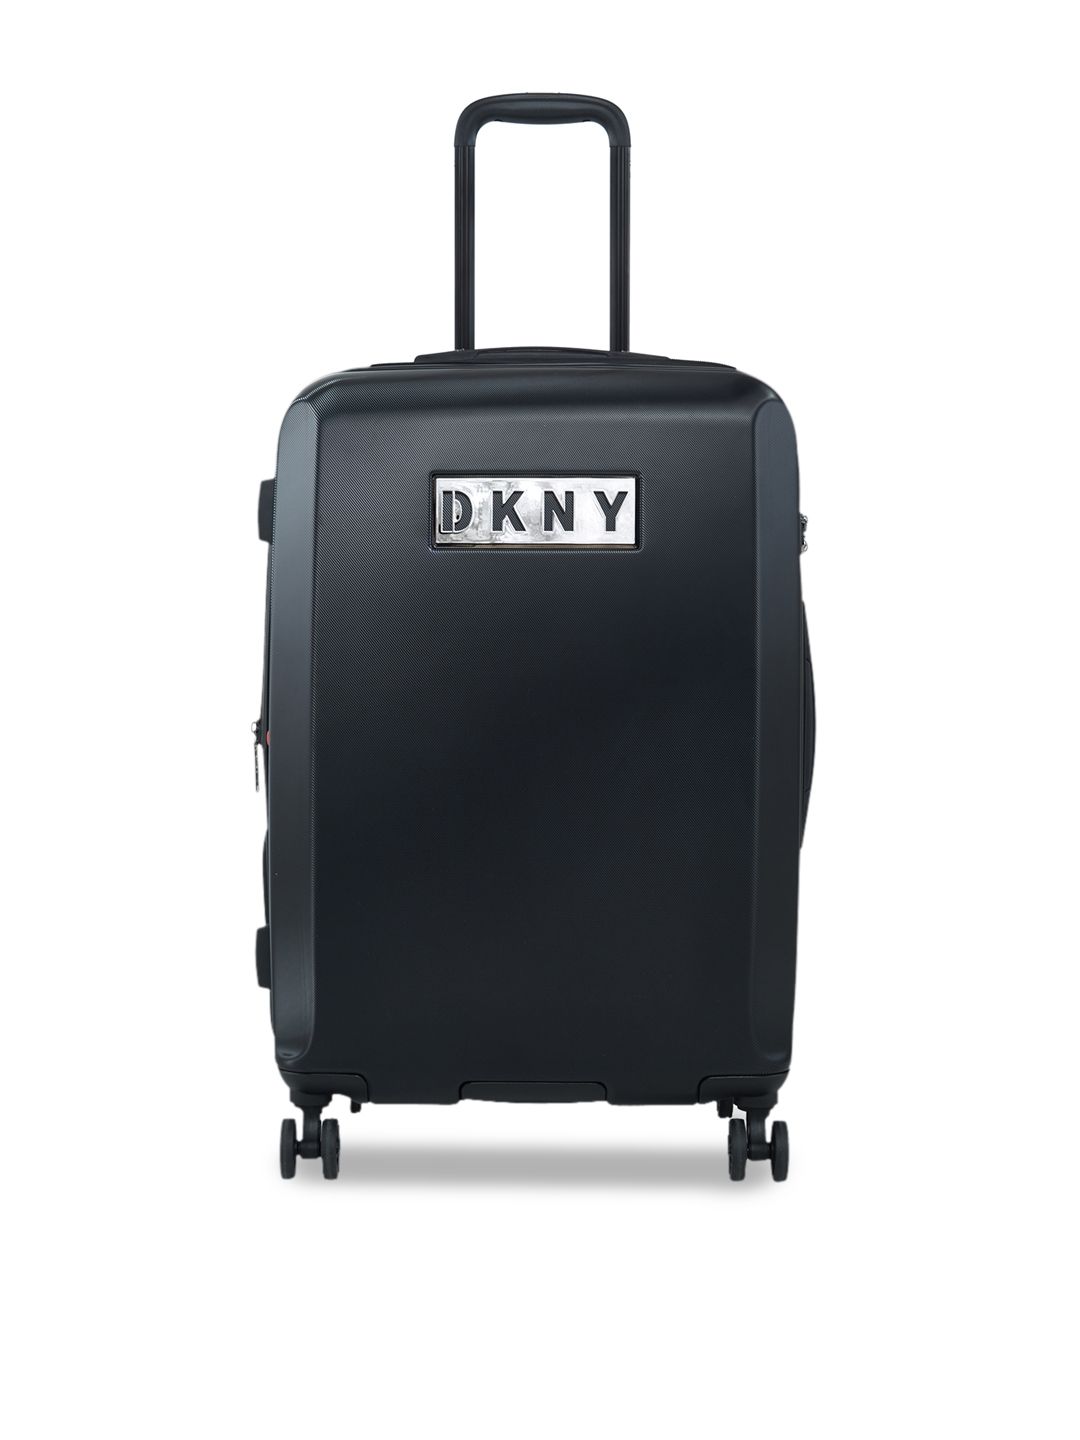 DKNY Alchemy Range Black Hard Medium Suitcase Price in India